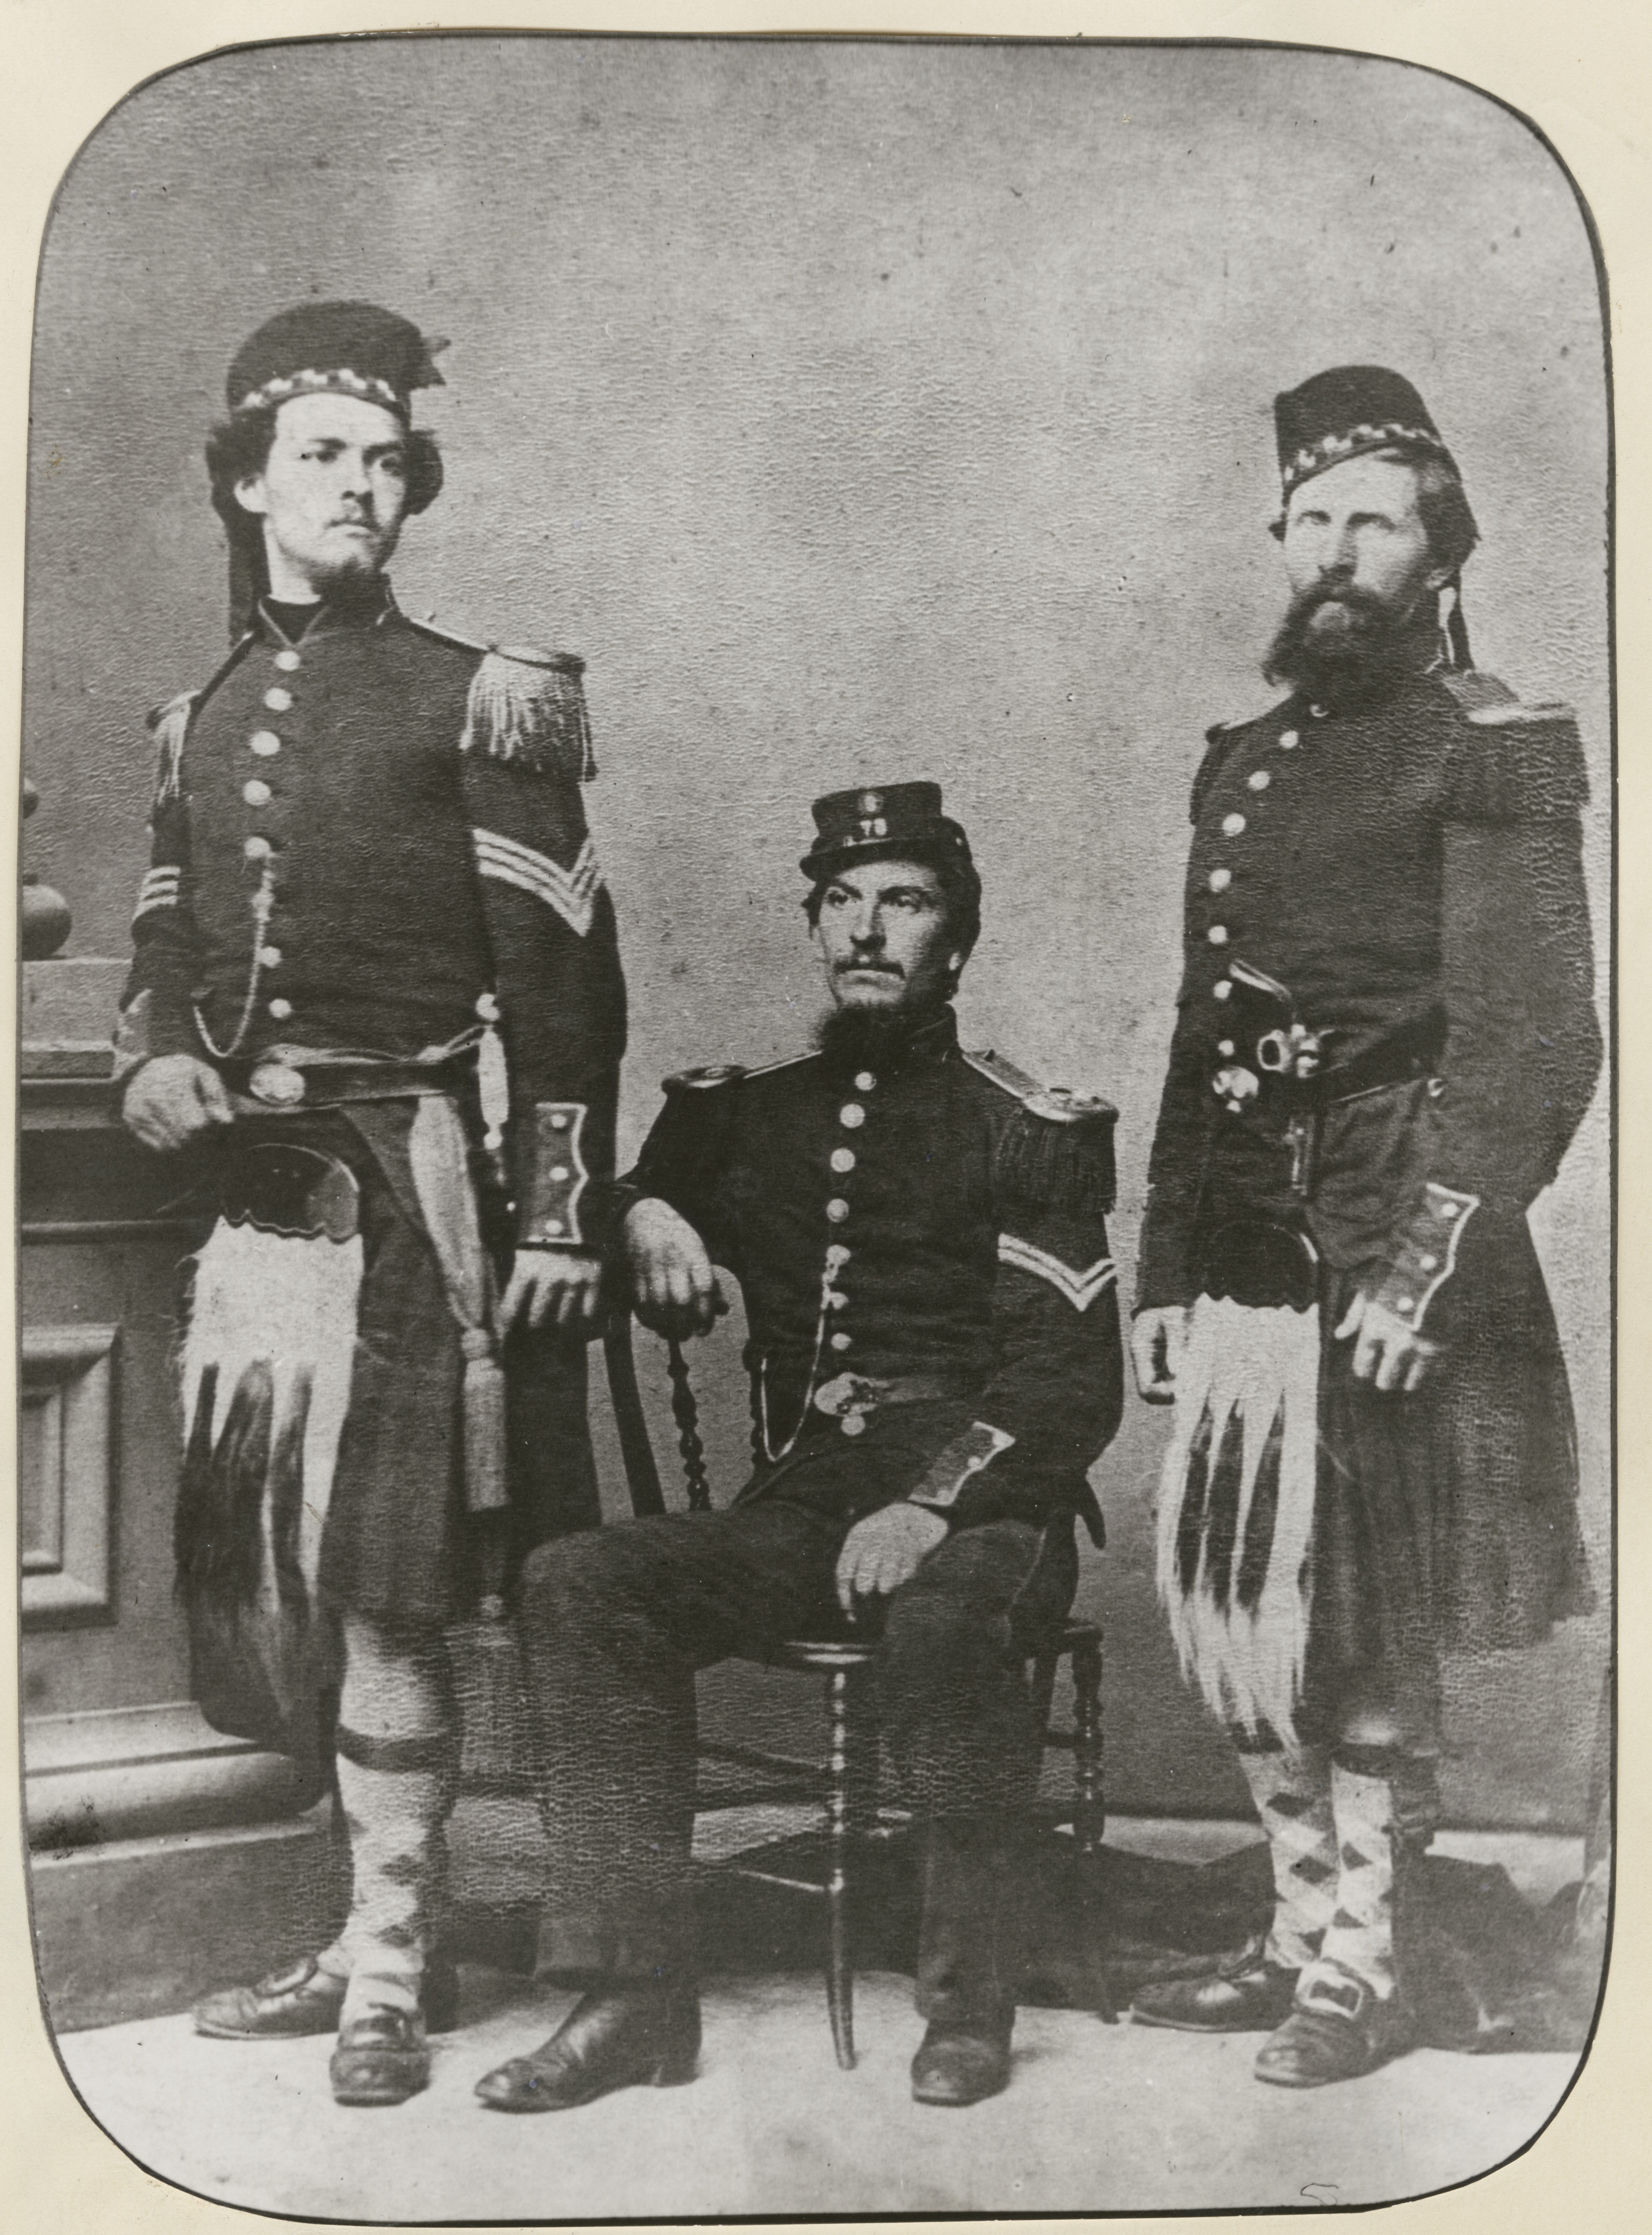 REGIMENT - Lincoln's Highlanders